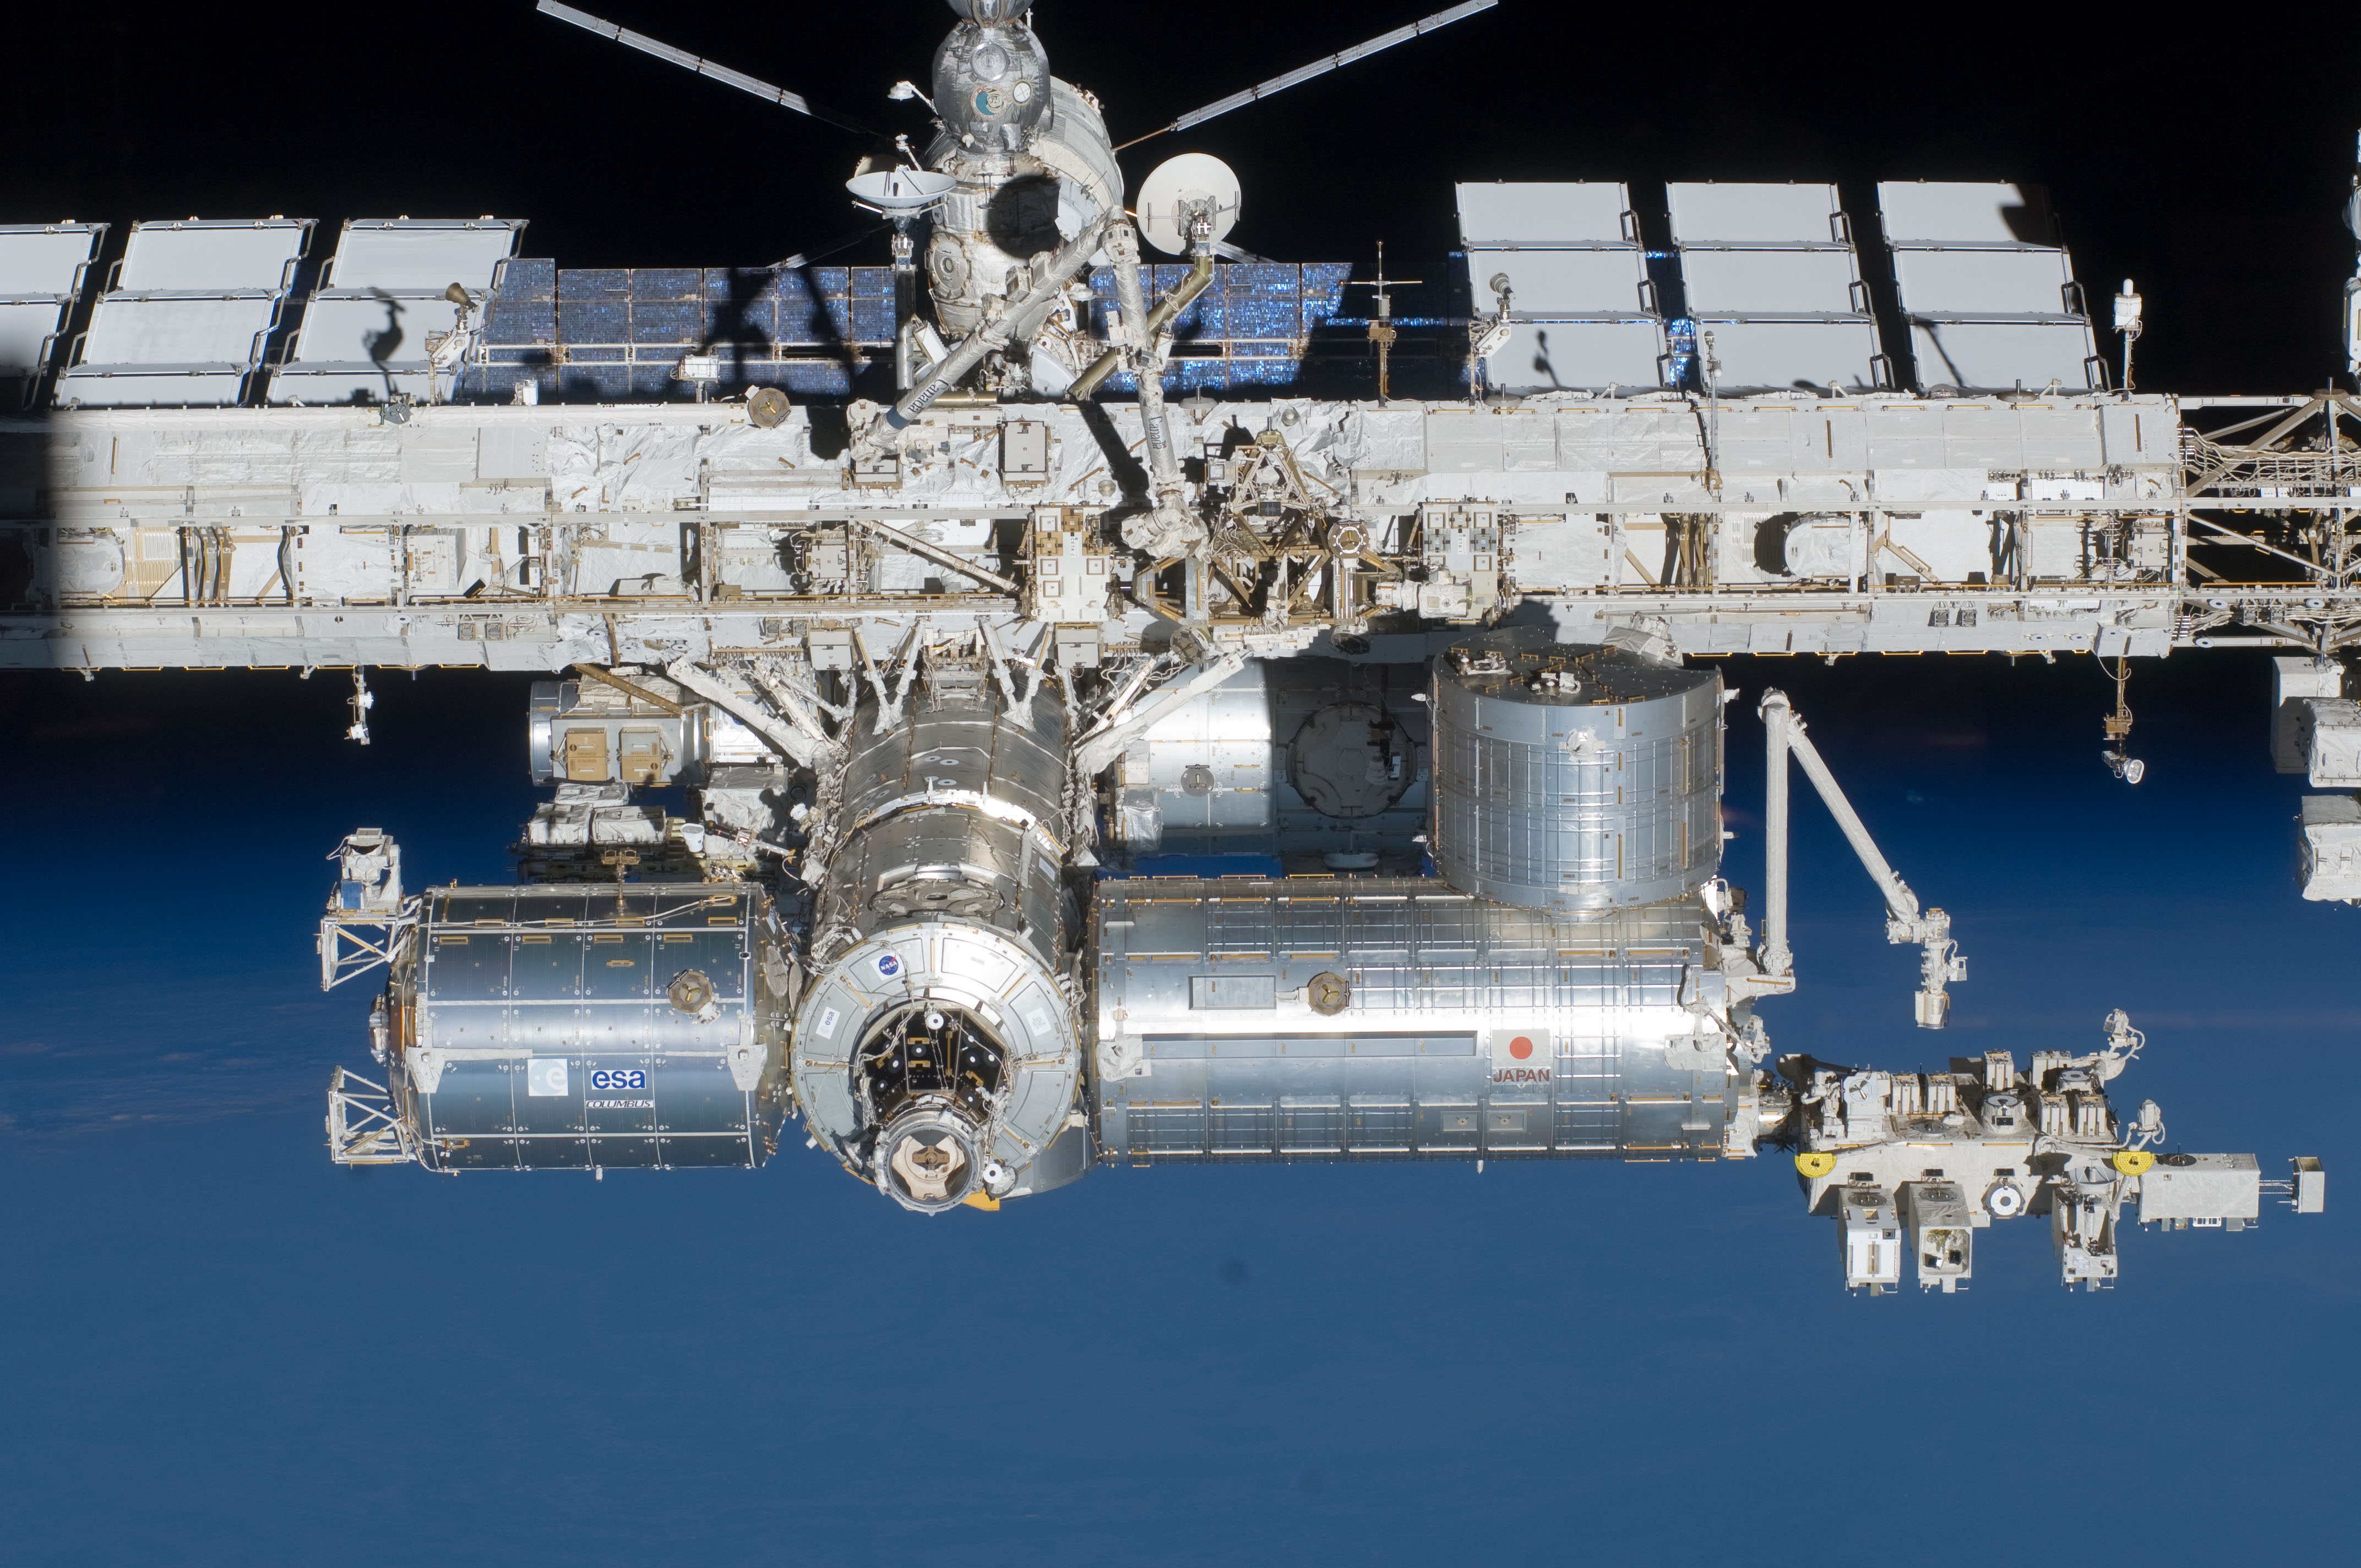 File:STS-134 International Space Station after undocking 4.jpg ...